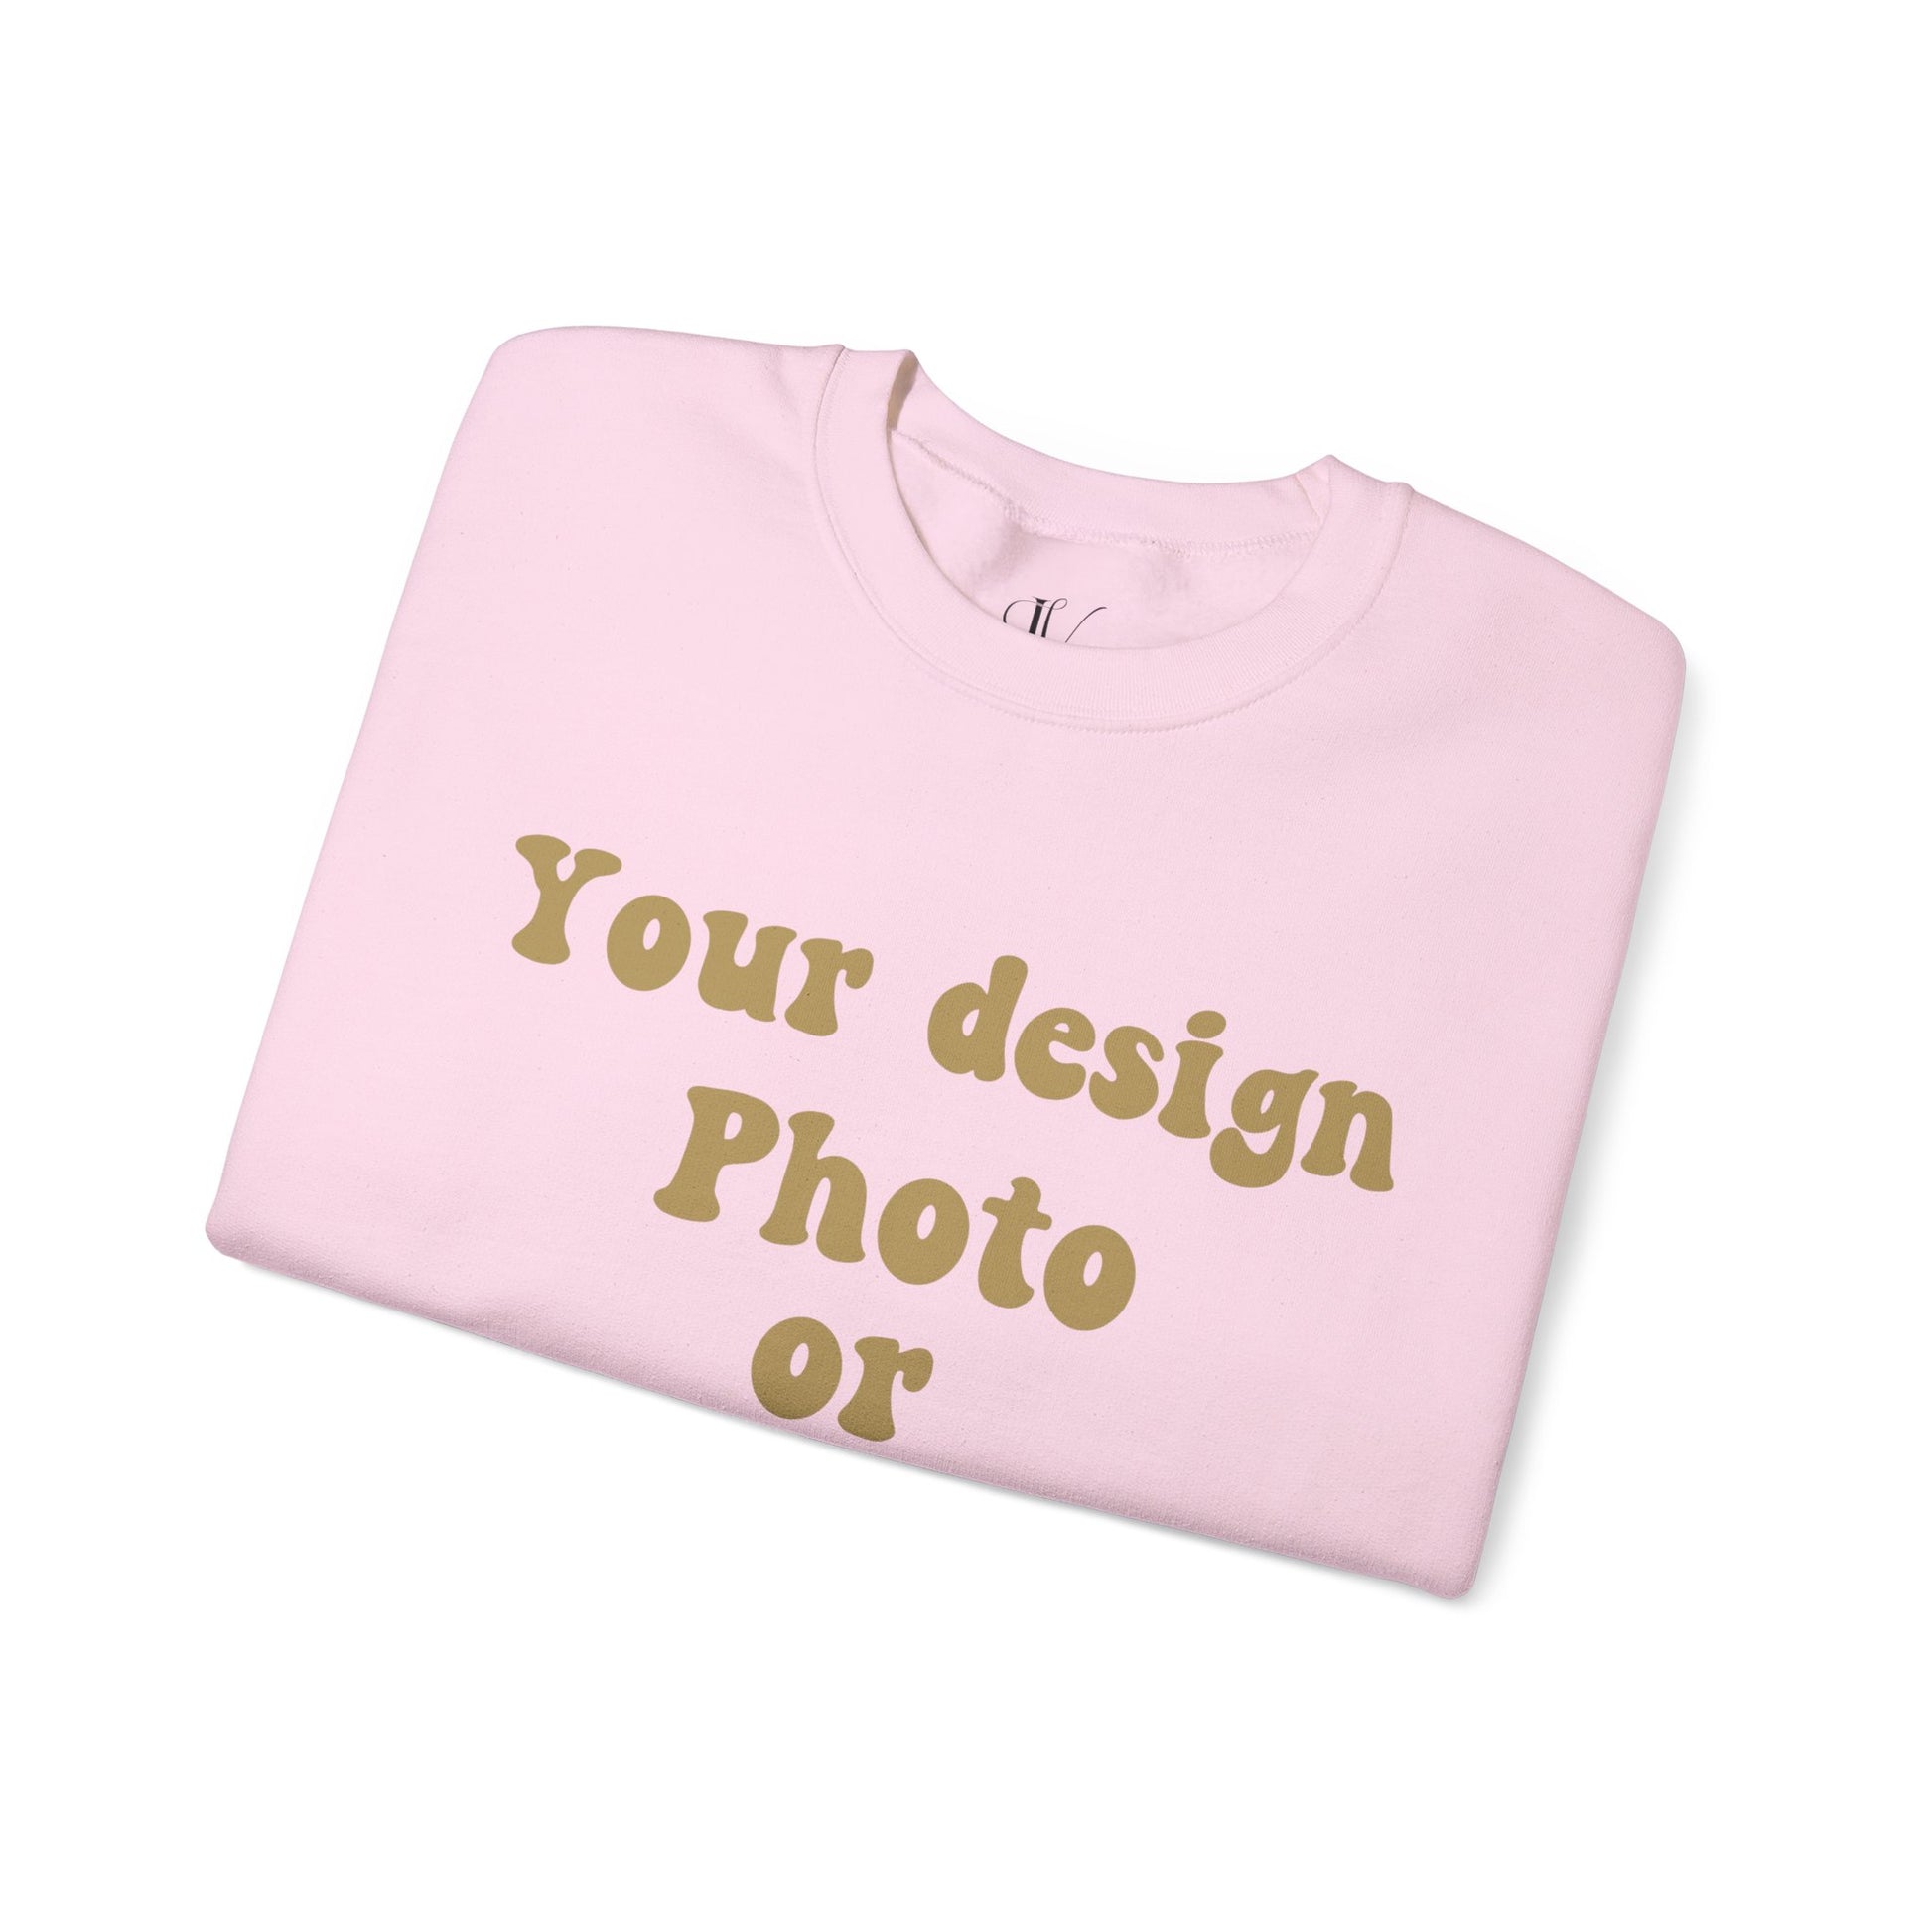 Imagin Vibes™ Crewneck Sweatshirt Personalized With Your Photo, Text Sweatshirt   